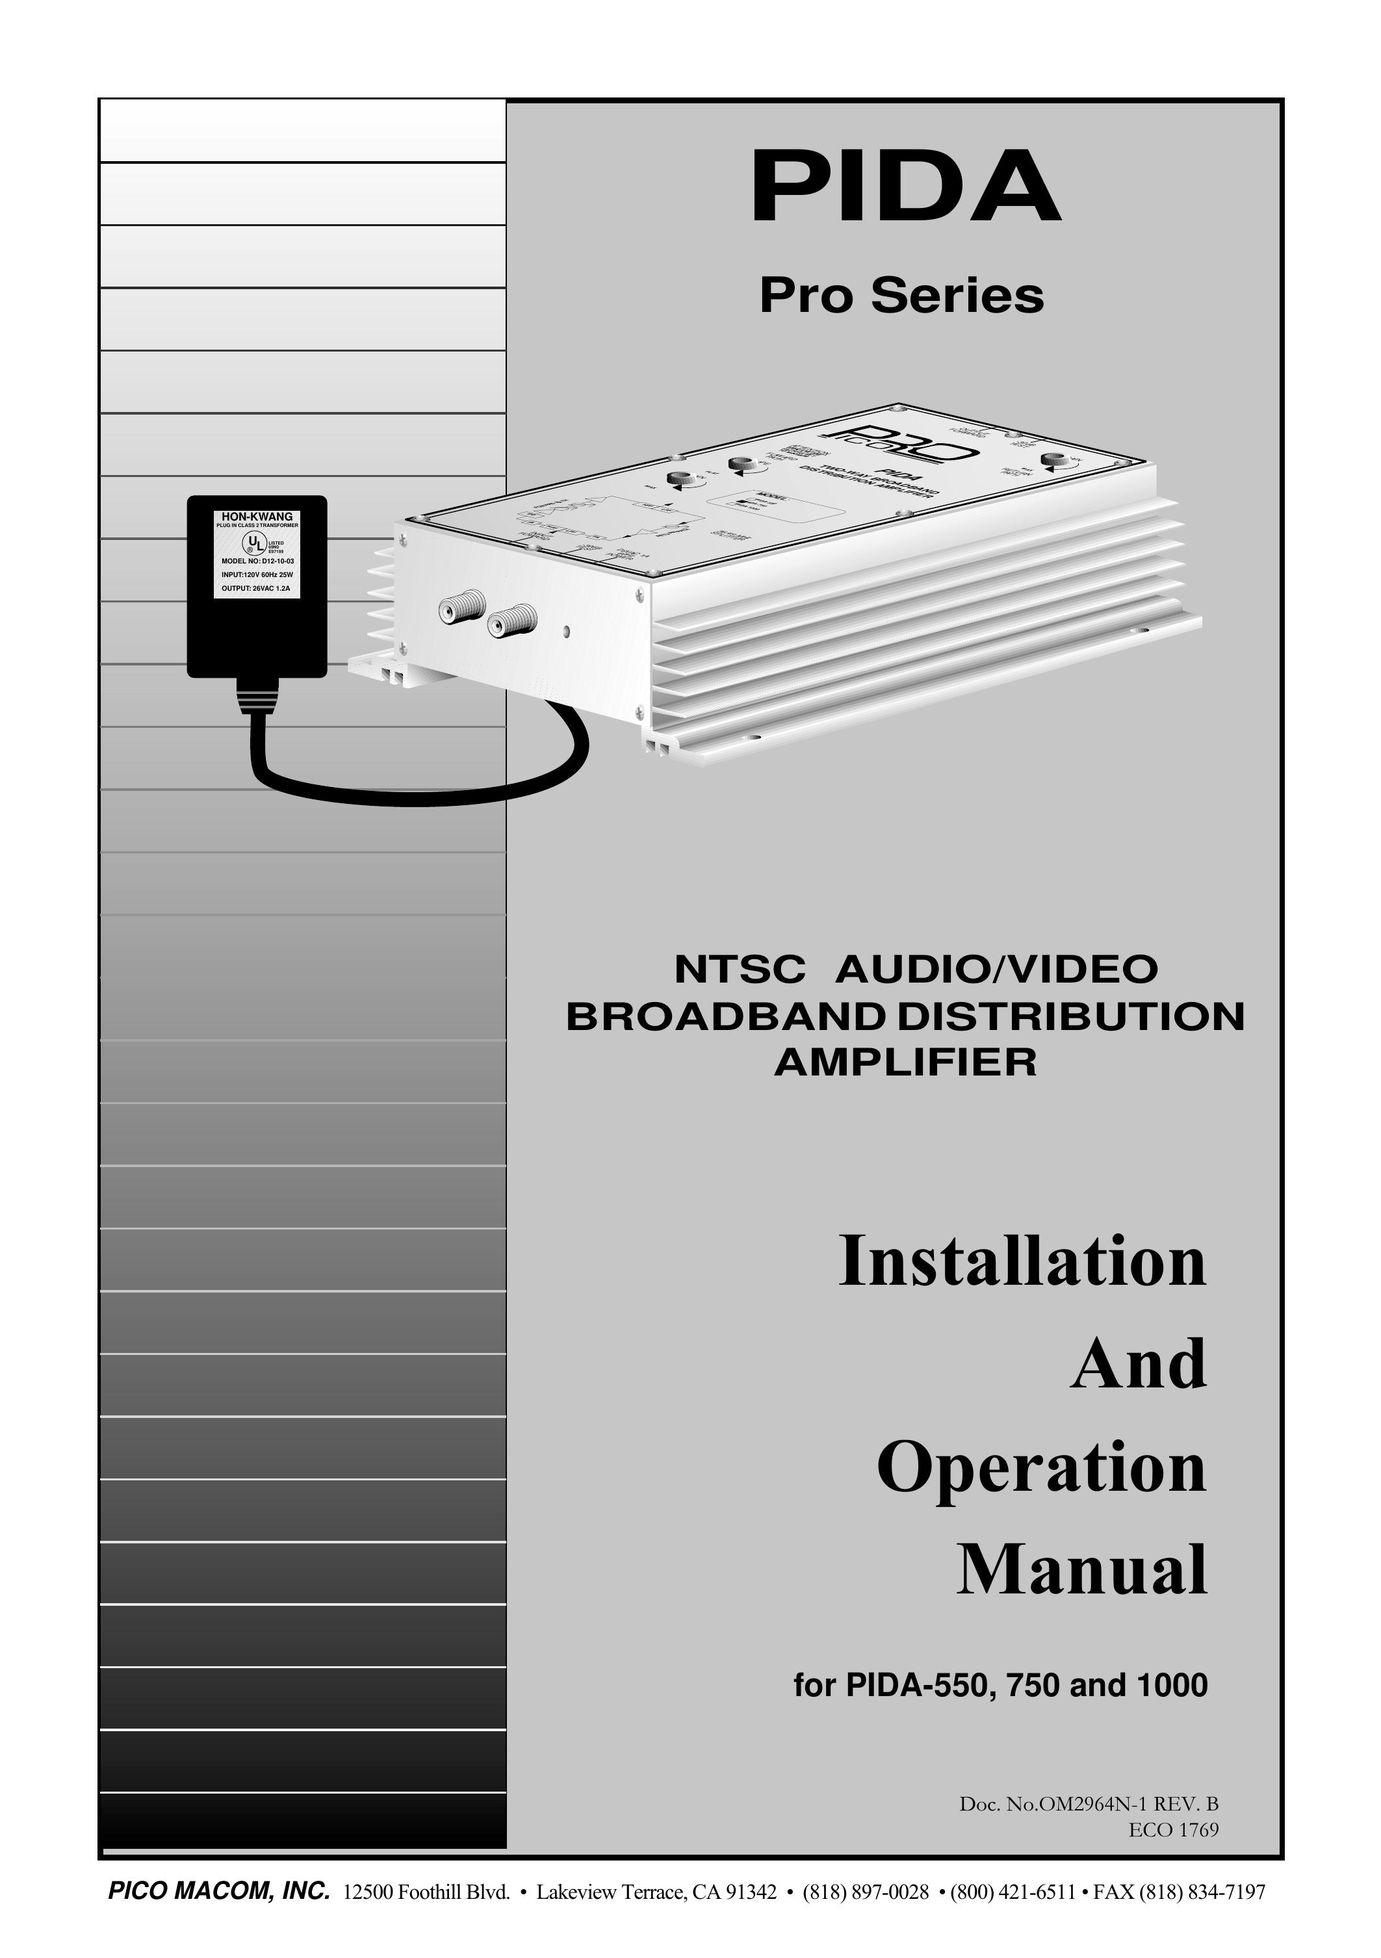 Pico Macom PIDA-550 Stereo Amplifier User Manual